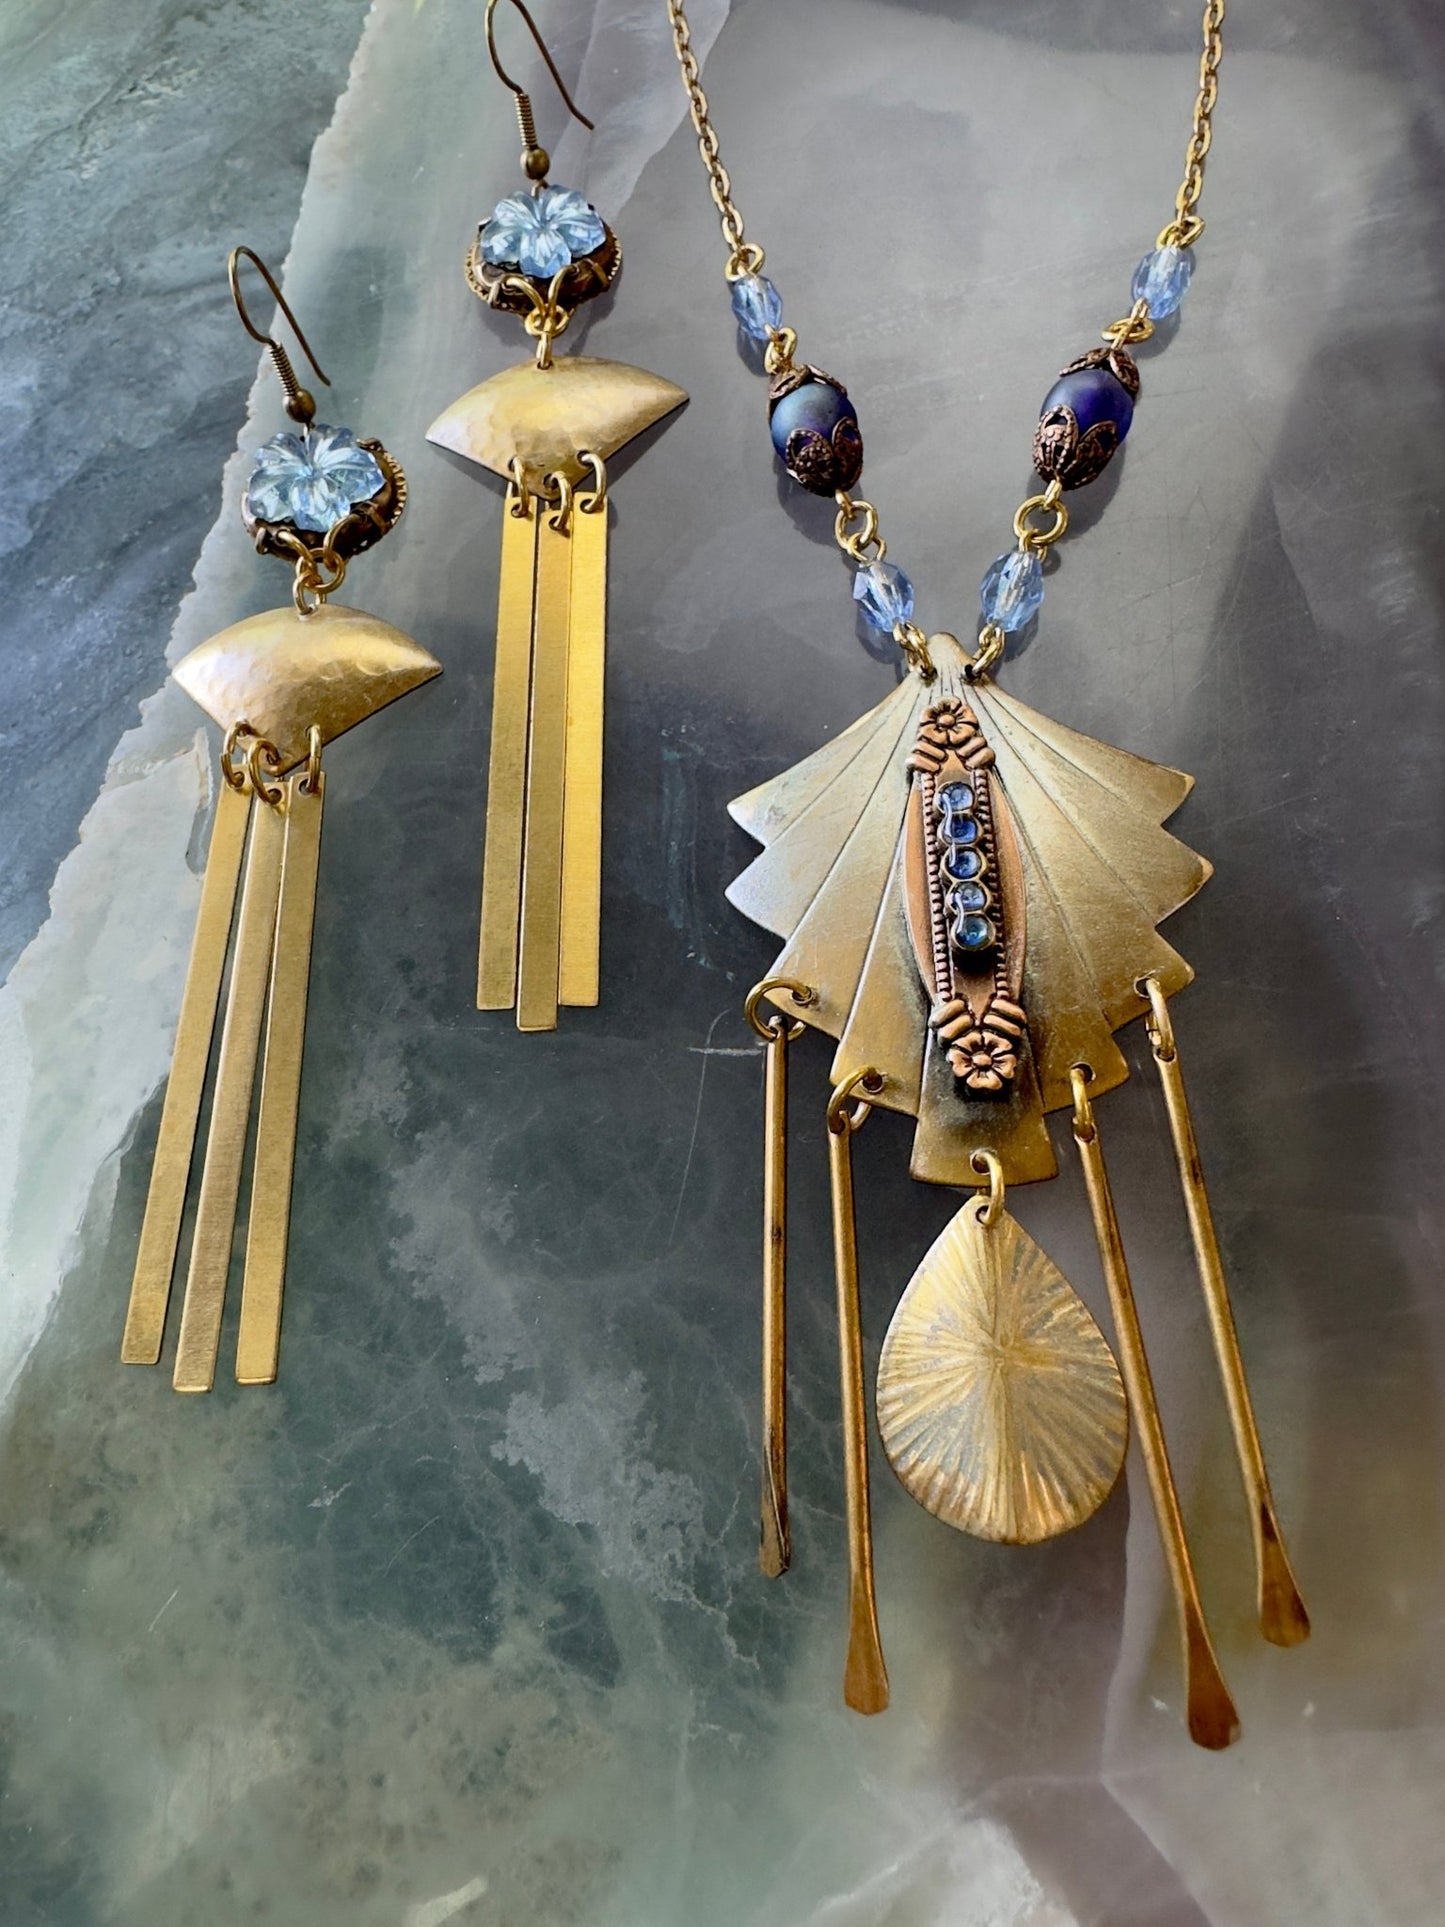 Deco Fleur Necklace Earrings Kit - Vintaj Design - 5/22/24 - Vintaj Live Shop